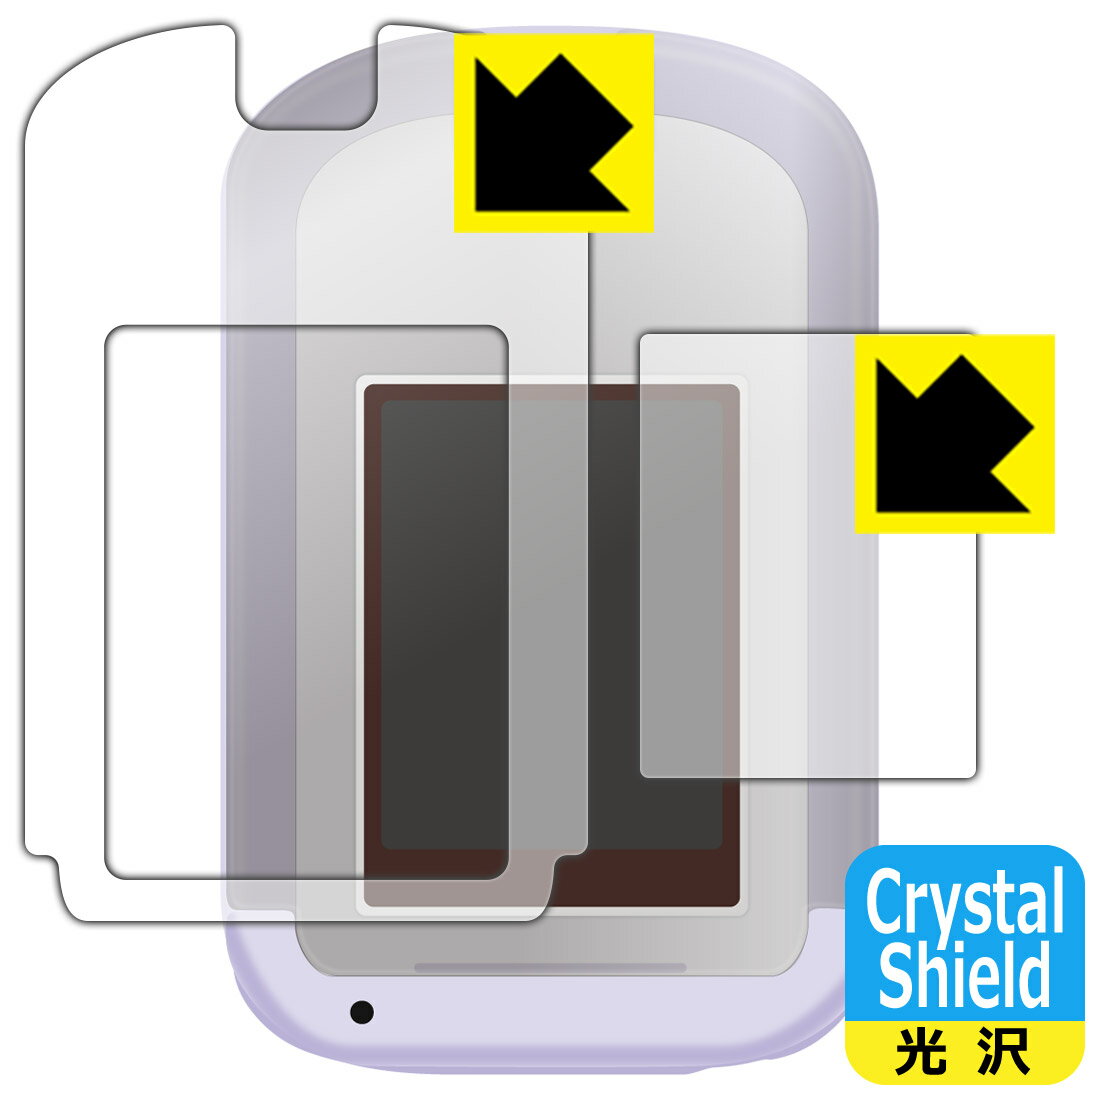 PDAH[ J[hł! ݂R炵Phone with U Ή Crystal Shield ی tB [ʗp/Jo[p]  { { А